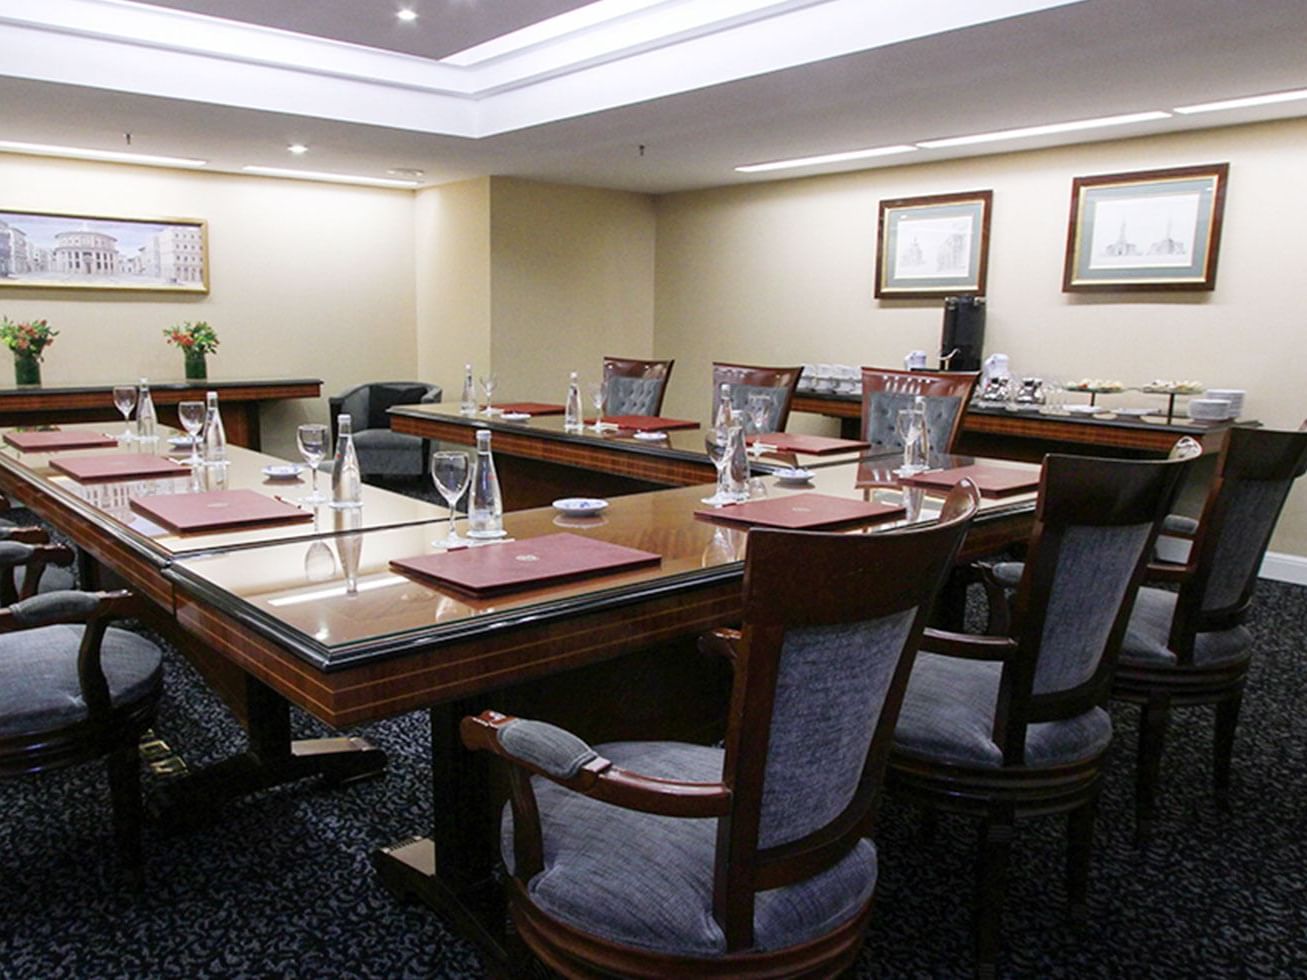 Meeting room table arrangement in Hotel Emperador Buenos Aires